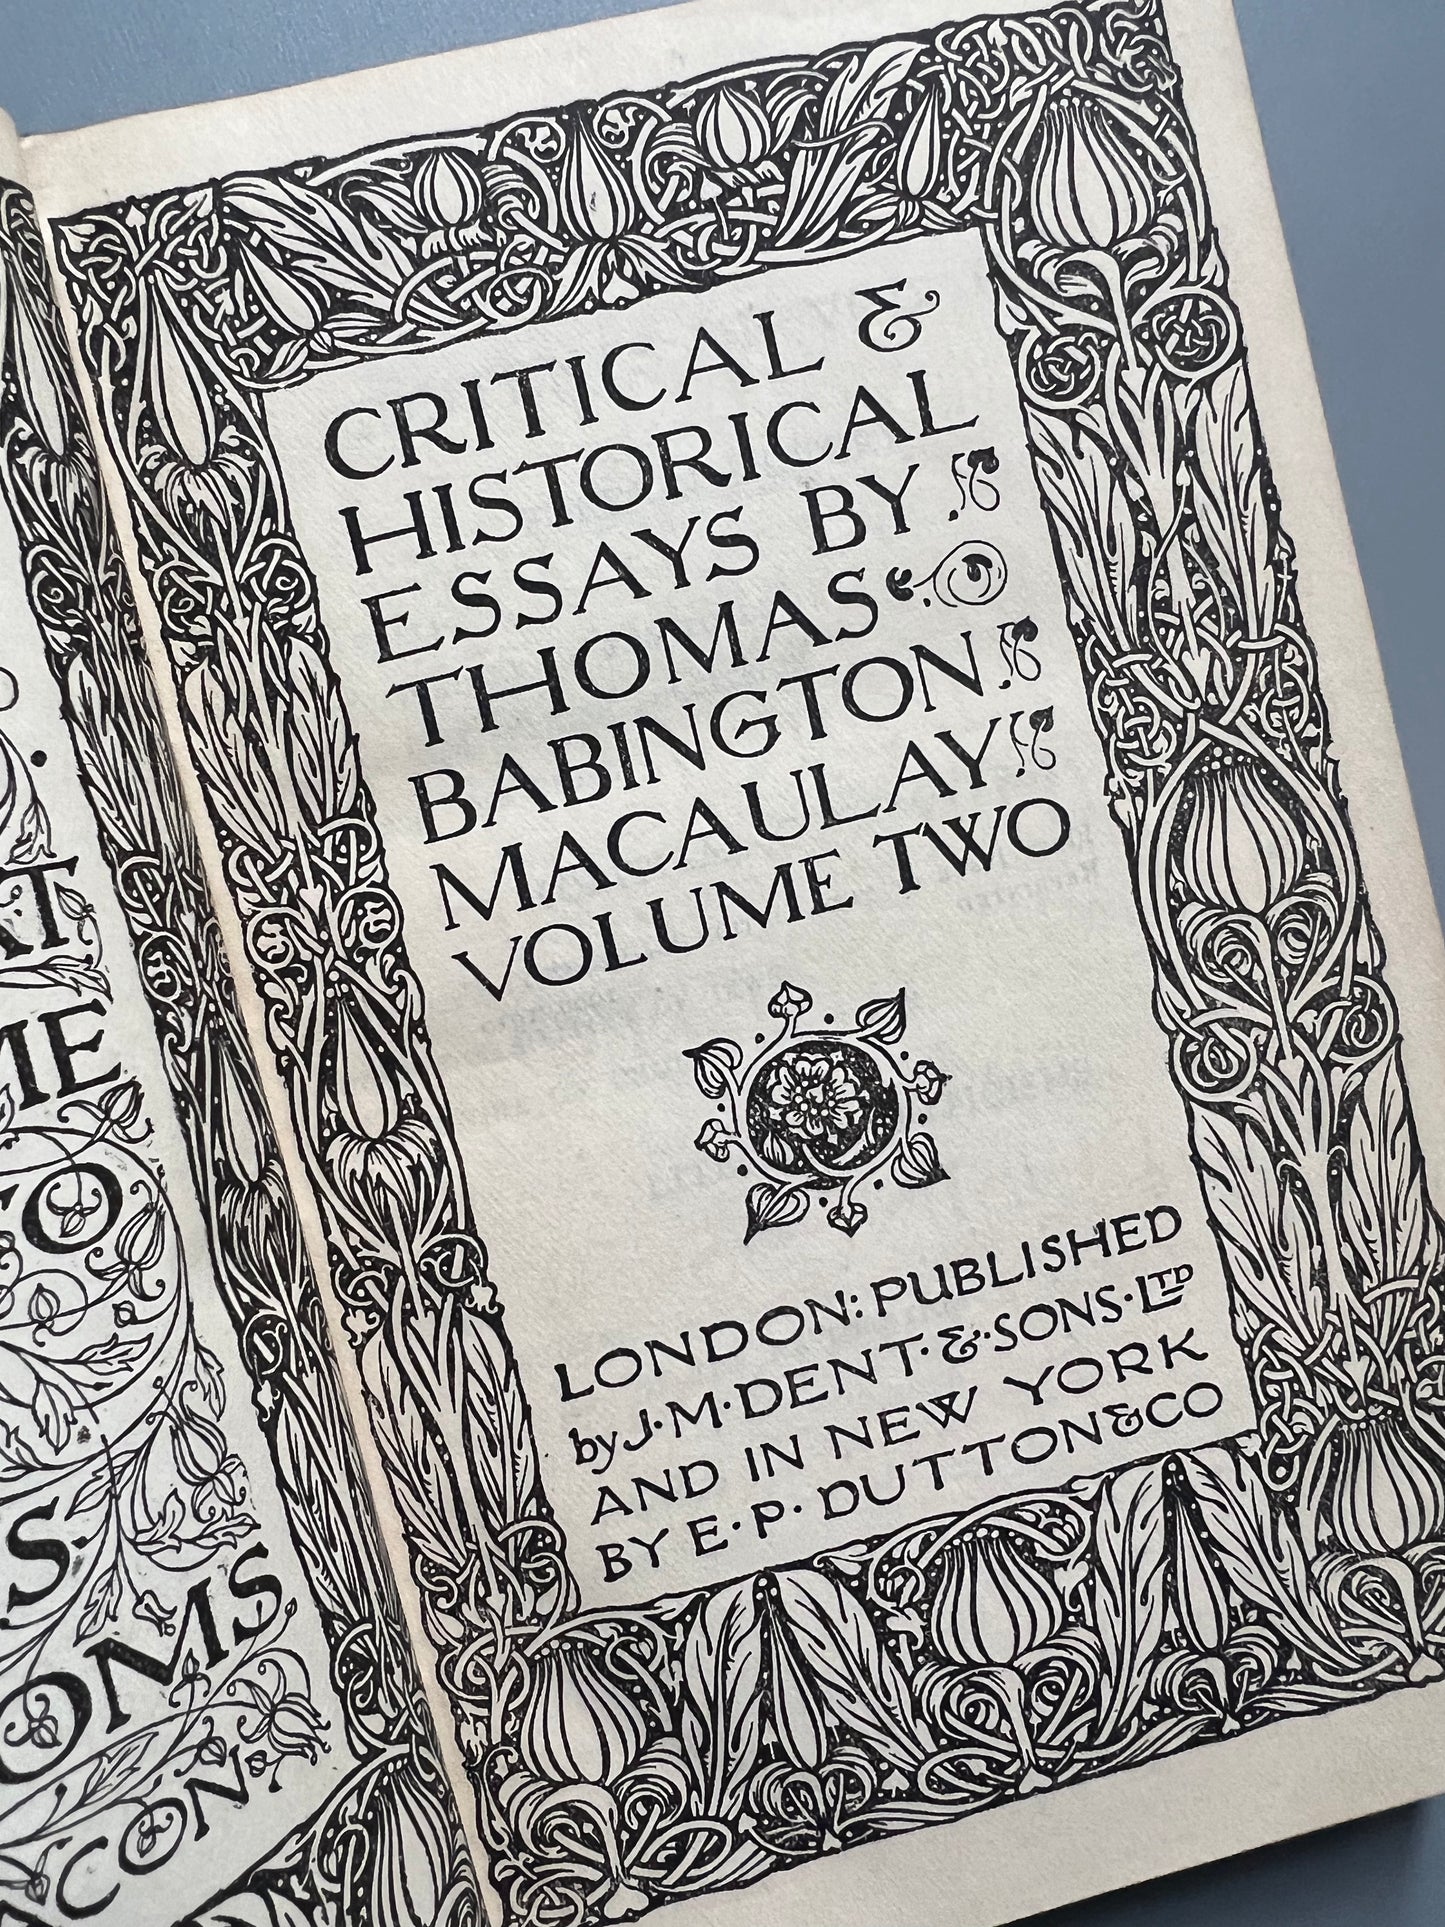 Critical and historical essays by Thomas Babington Macaulay - J. M. Dent & Sons, 1911